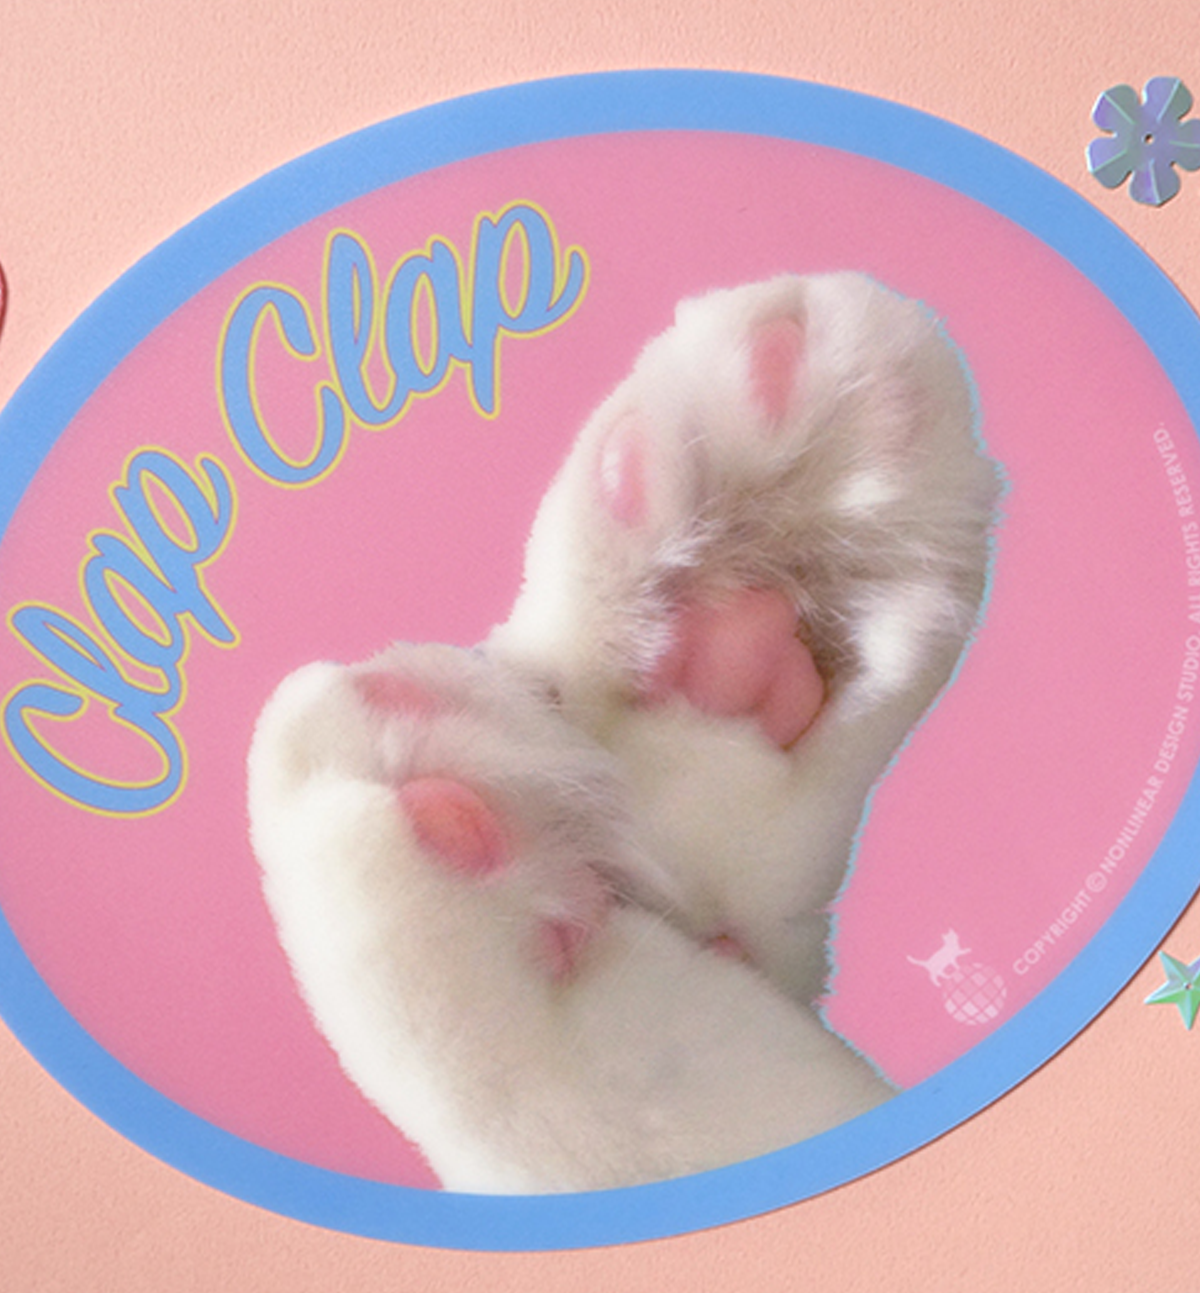 Boss Cat Mouse Mousepad [Pink]